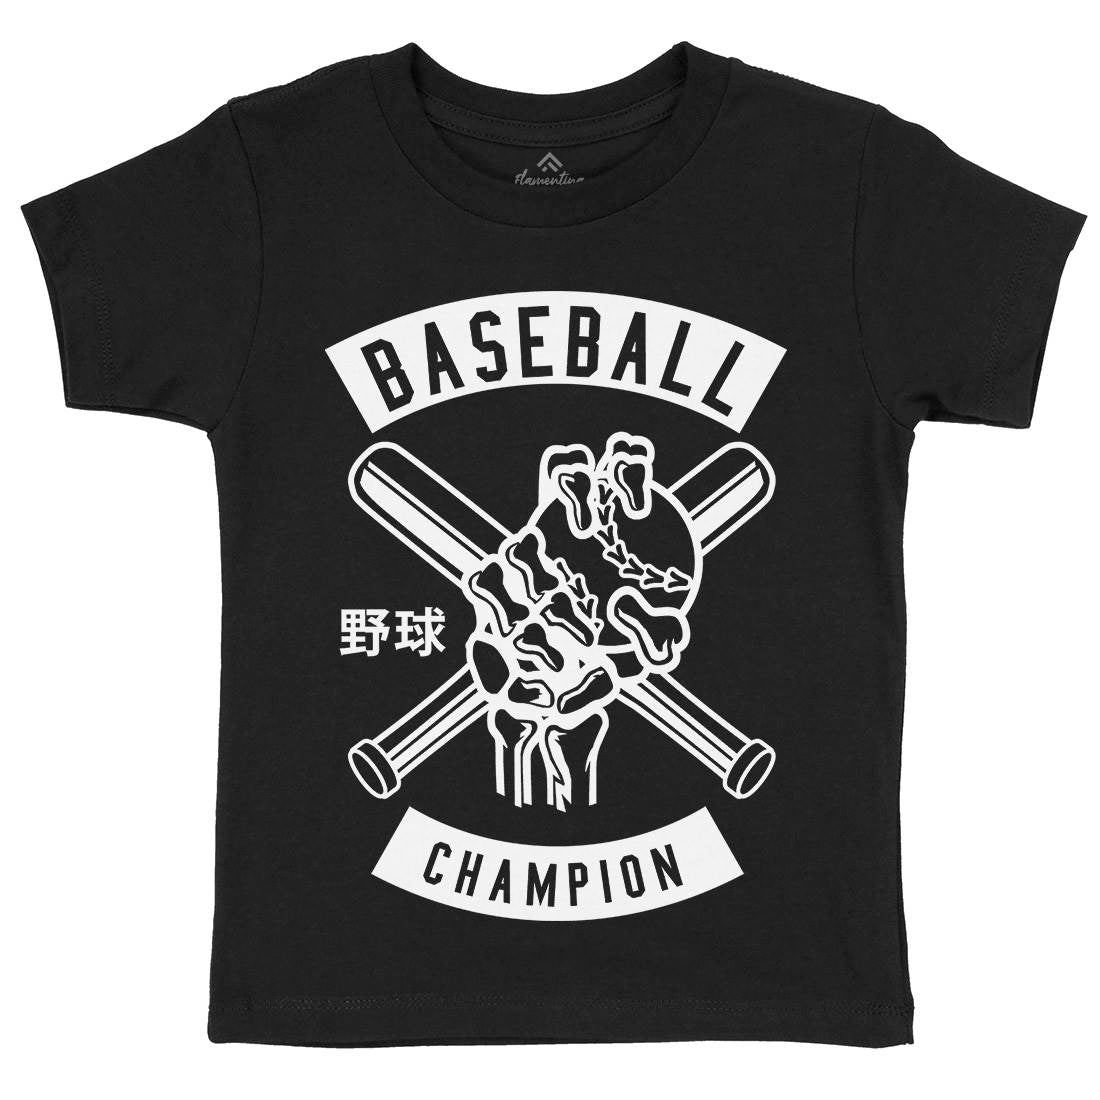 Baseball Champion Skull Hand Kids Crew Neck T-Shirt Sport B488